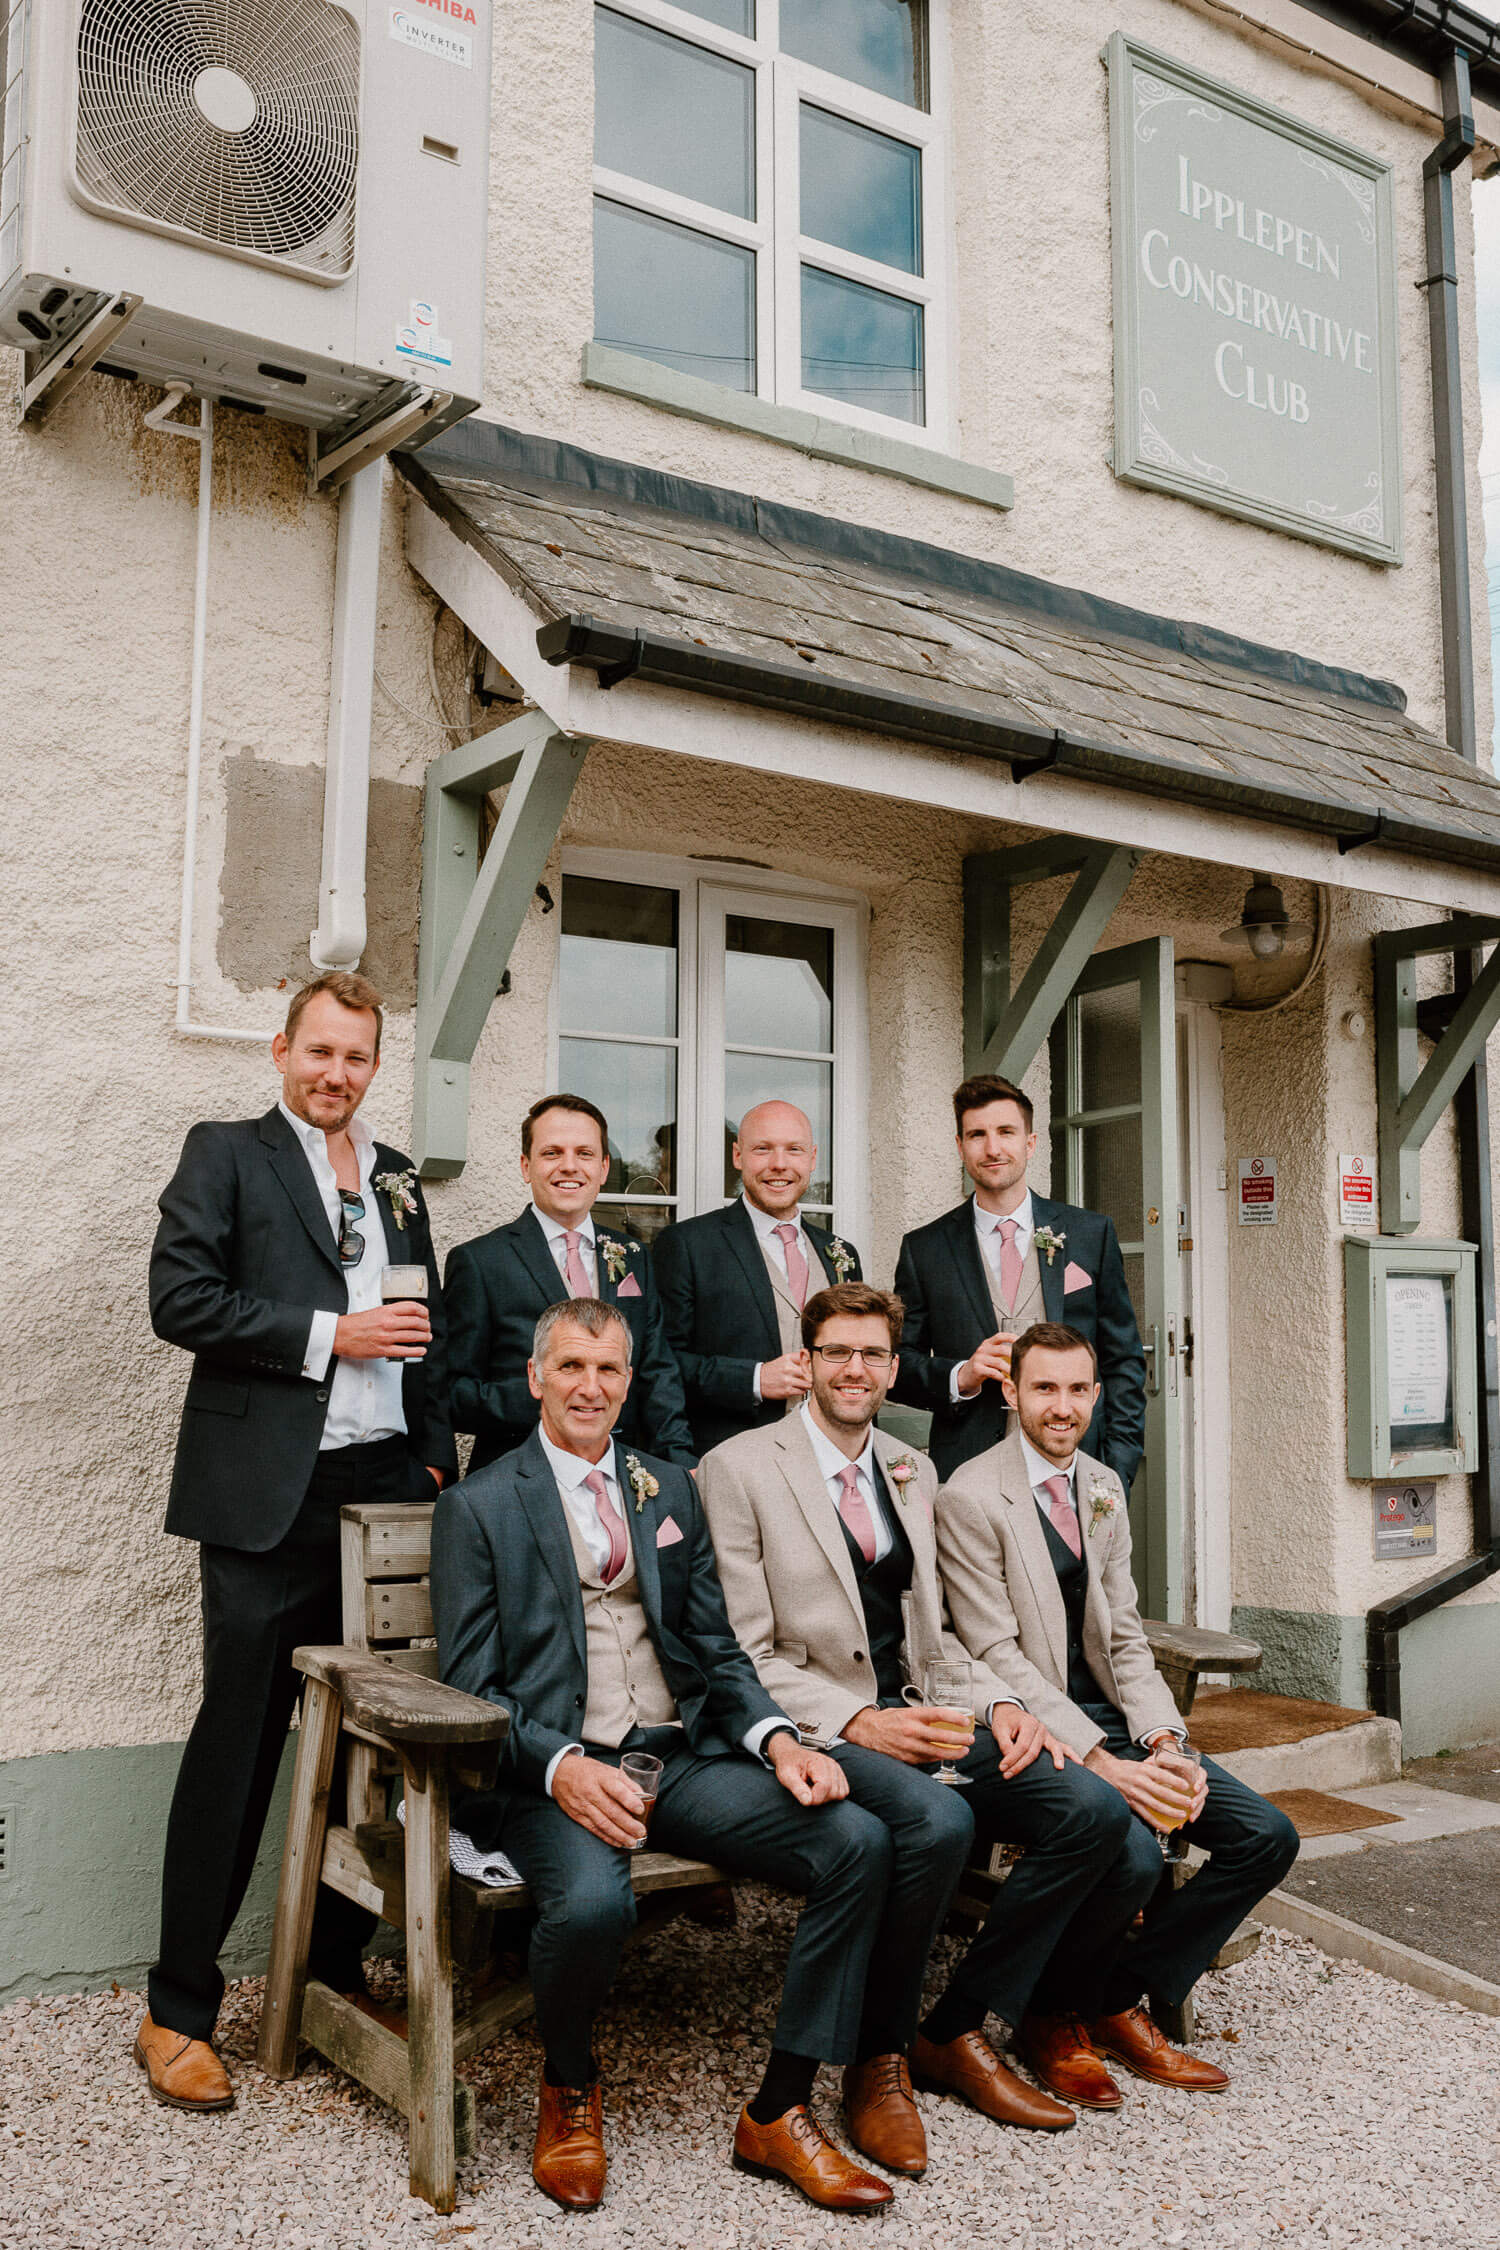 Groomsmen sitting outside Ipplepen Conservative Club enjoying a pre-wedding pint.